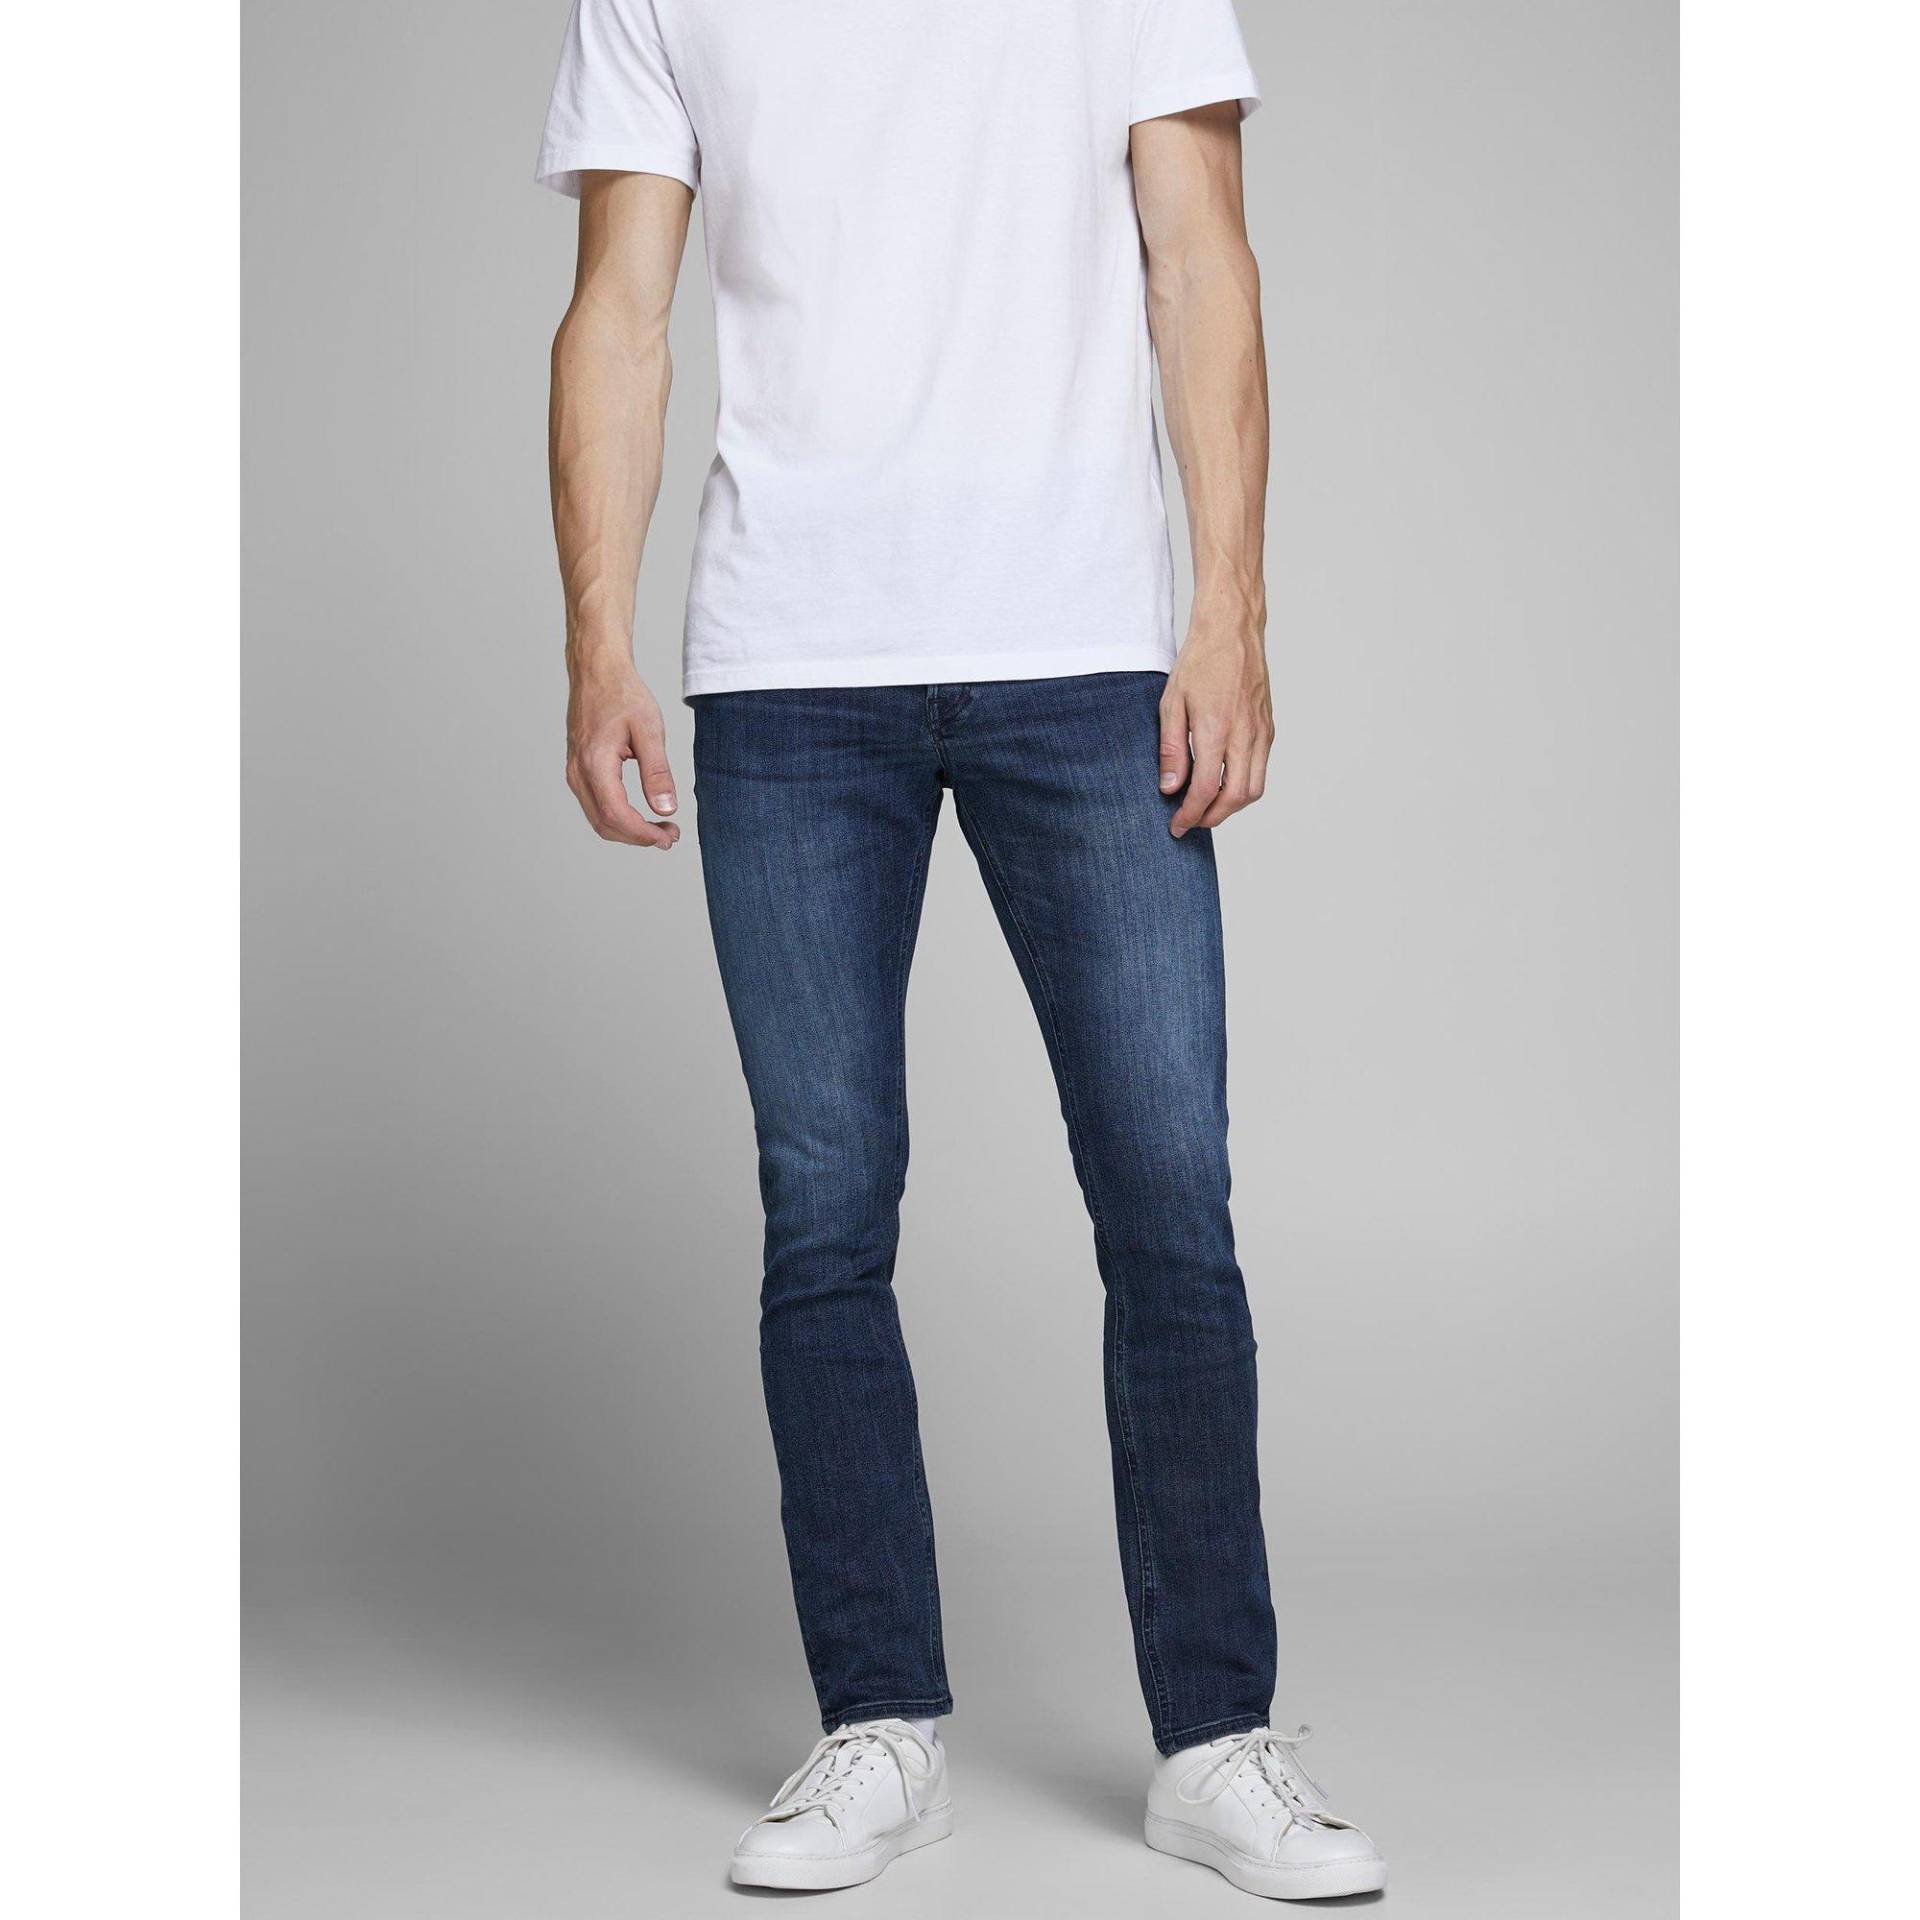 Jeans, Tapered Slim Fit Herren Blau Denim L30/W28 von JACK & JONES